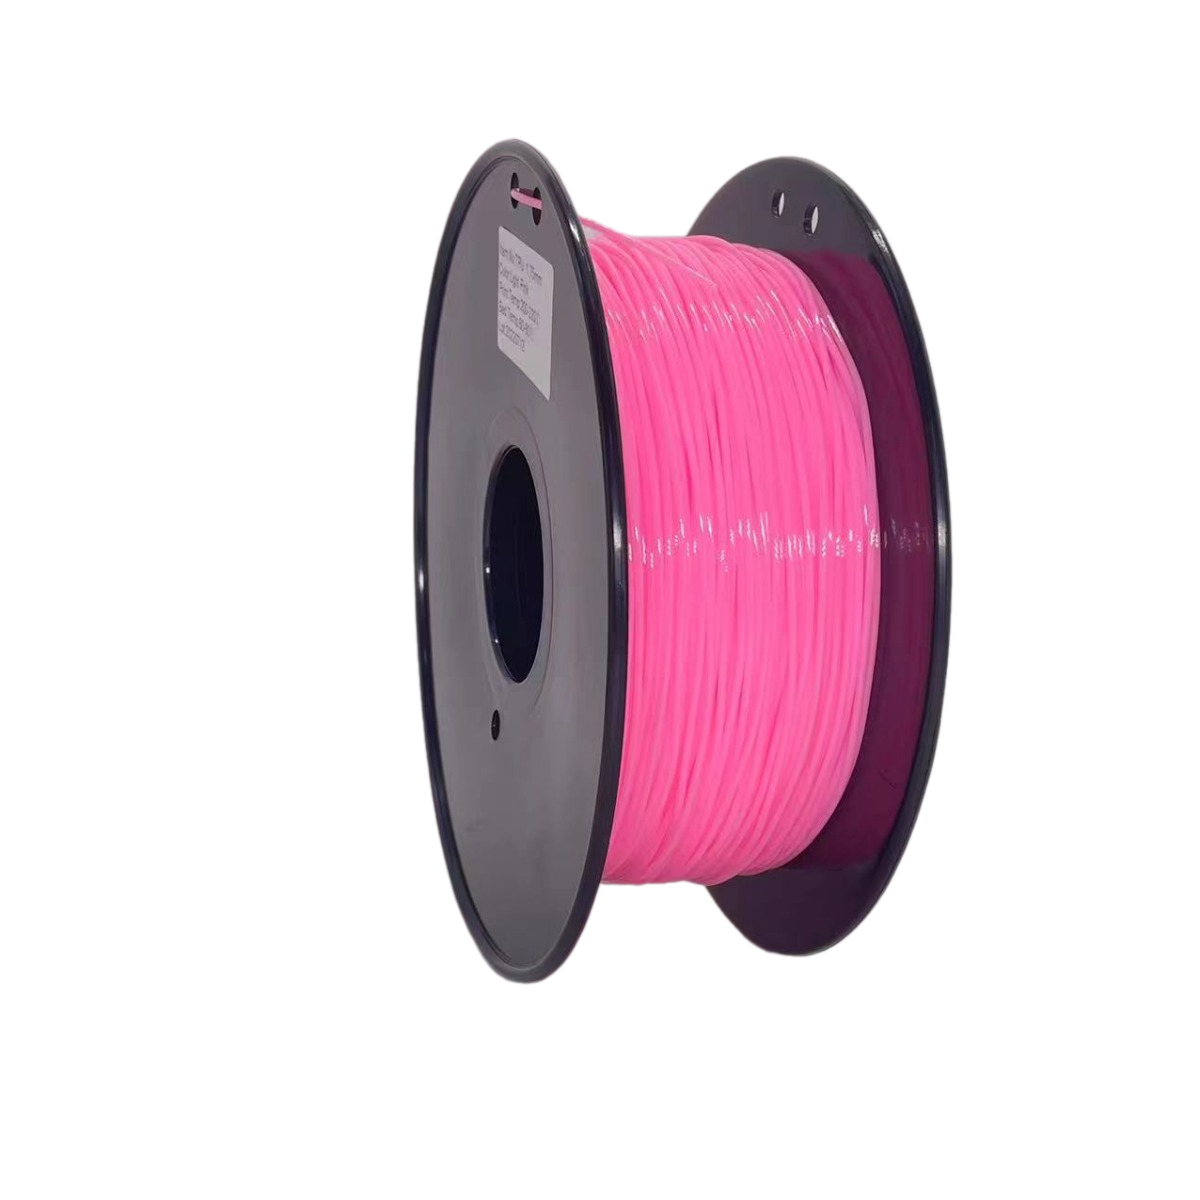 TPU 1.75mm 3D Printer Filament 1kg Spool-Dimensional Accuracy +/- 0.03mm